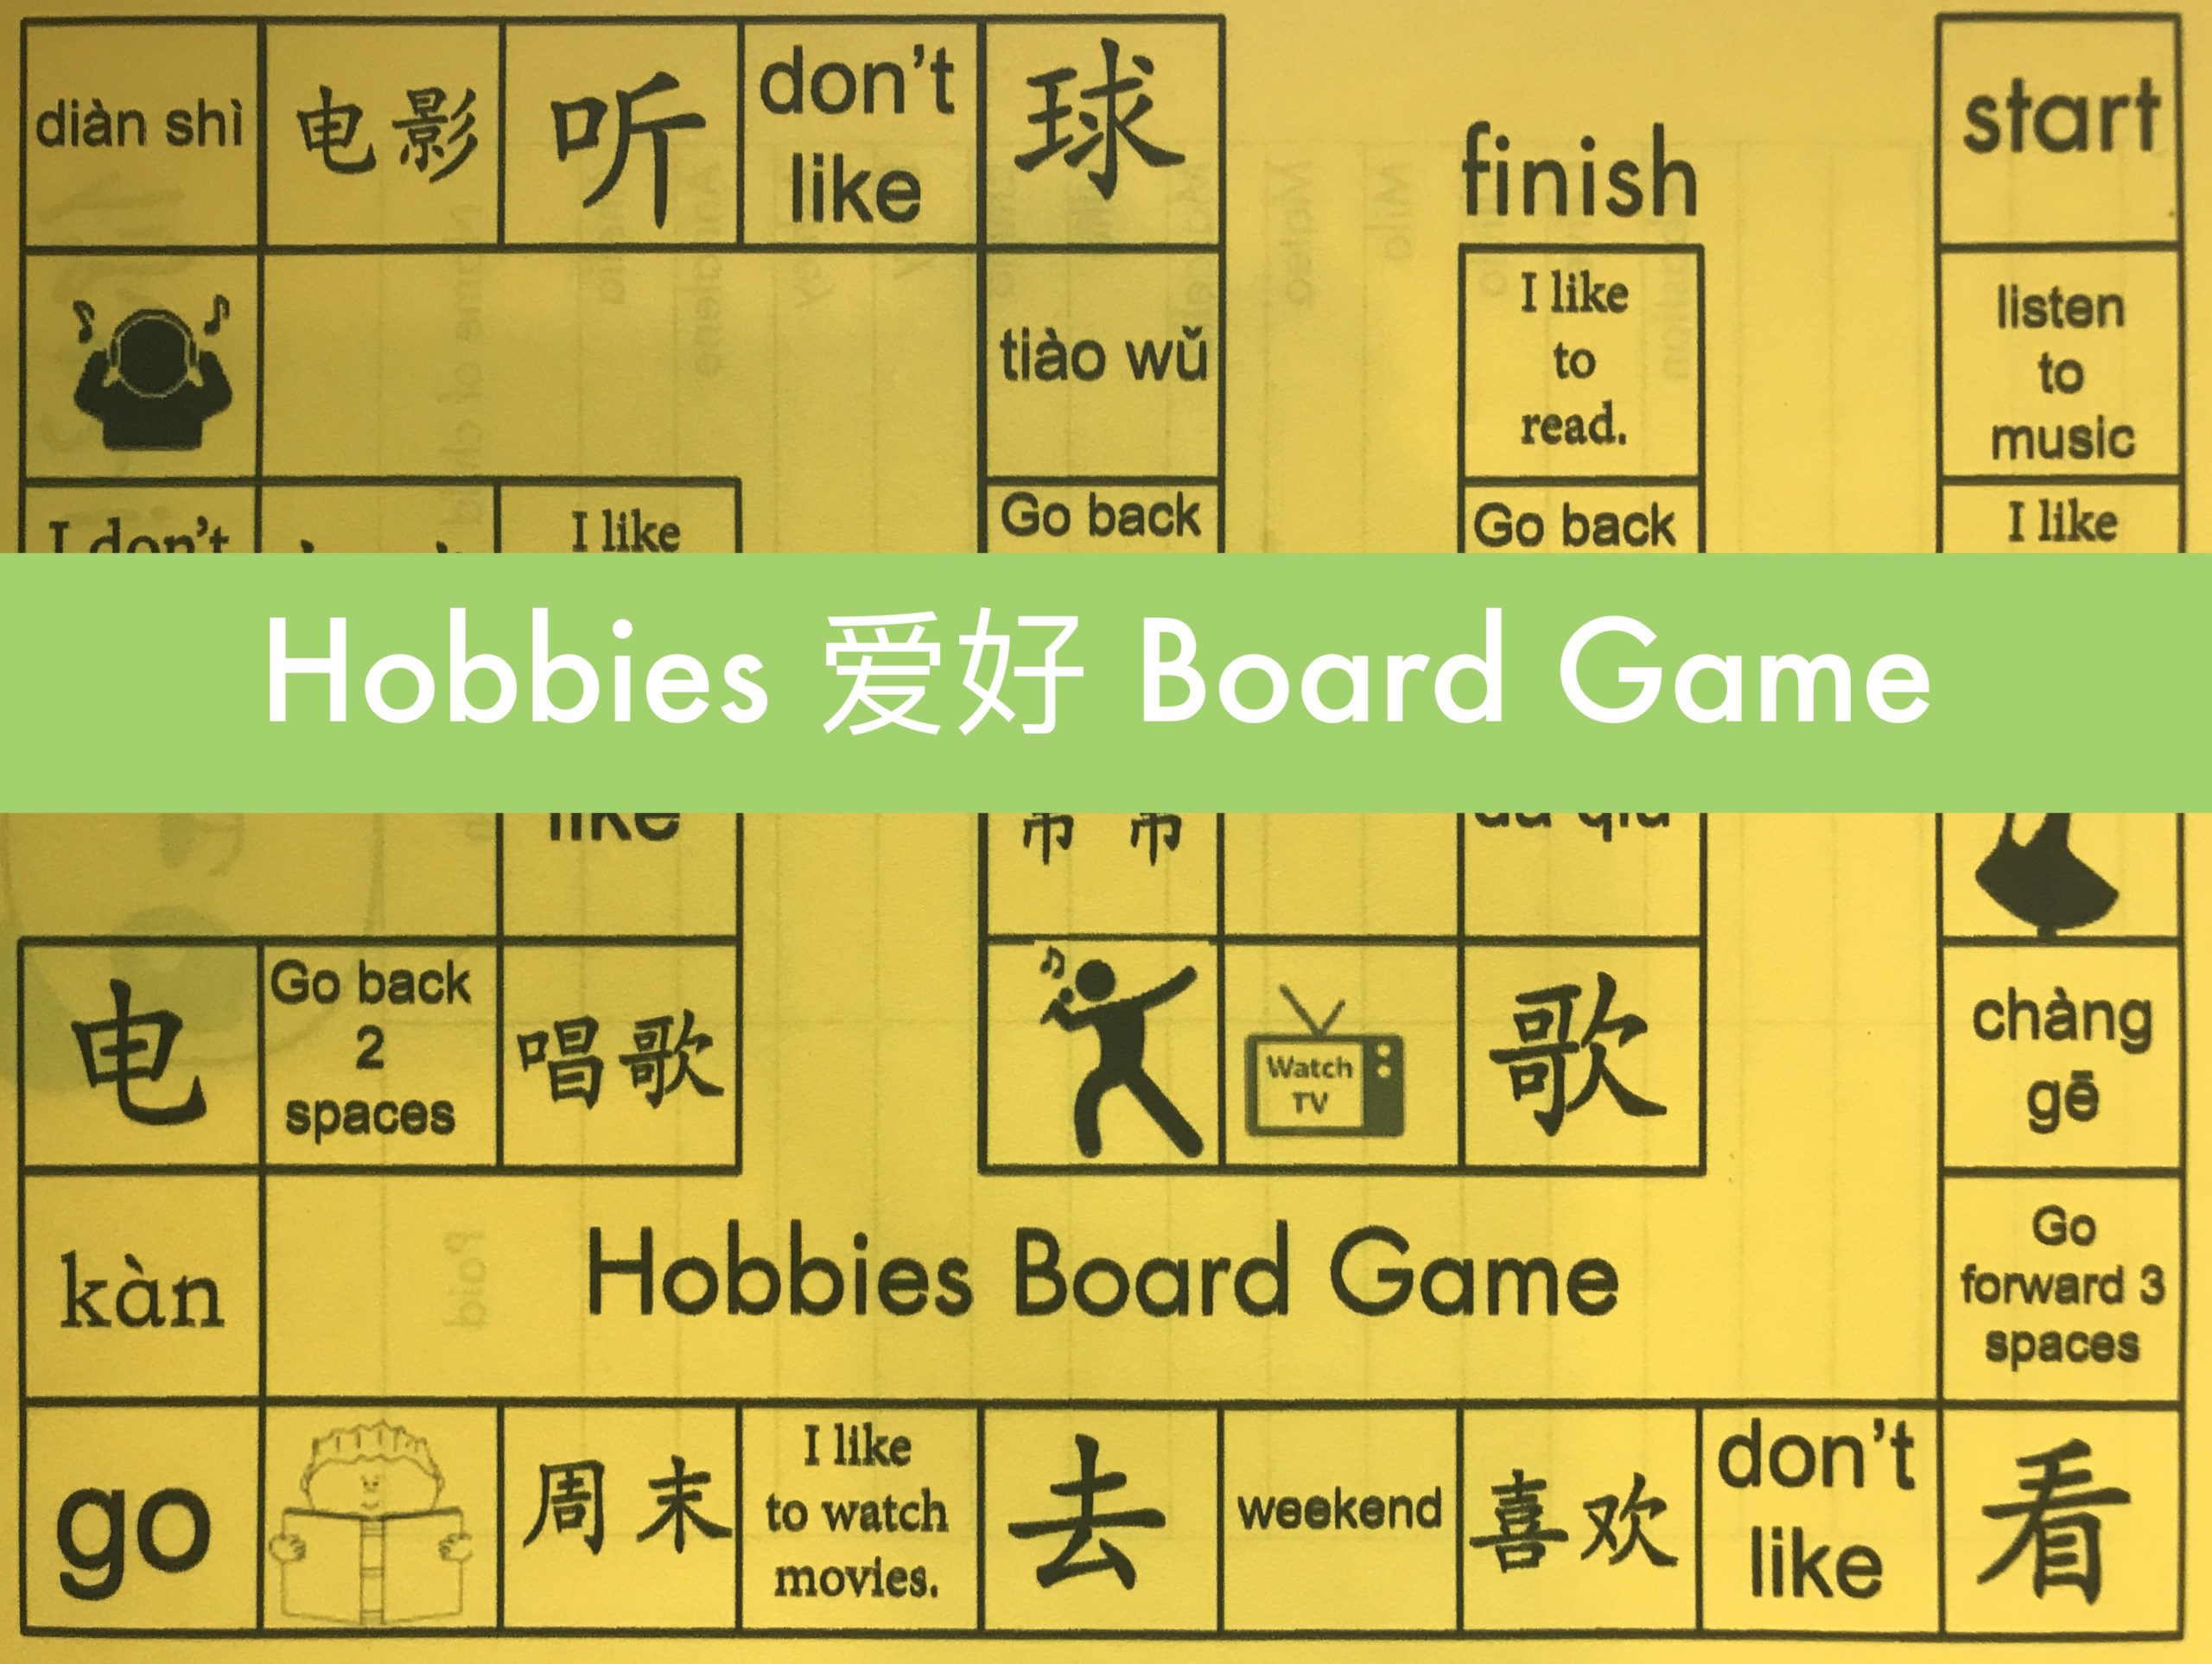 Games and Hobbies 4, PDF, Hobbies